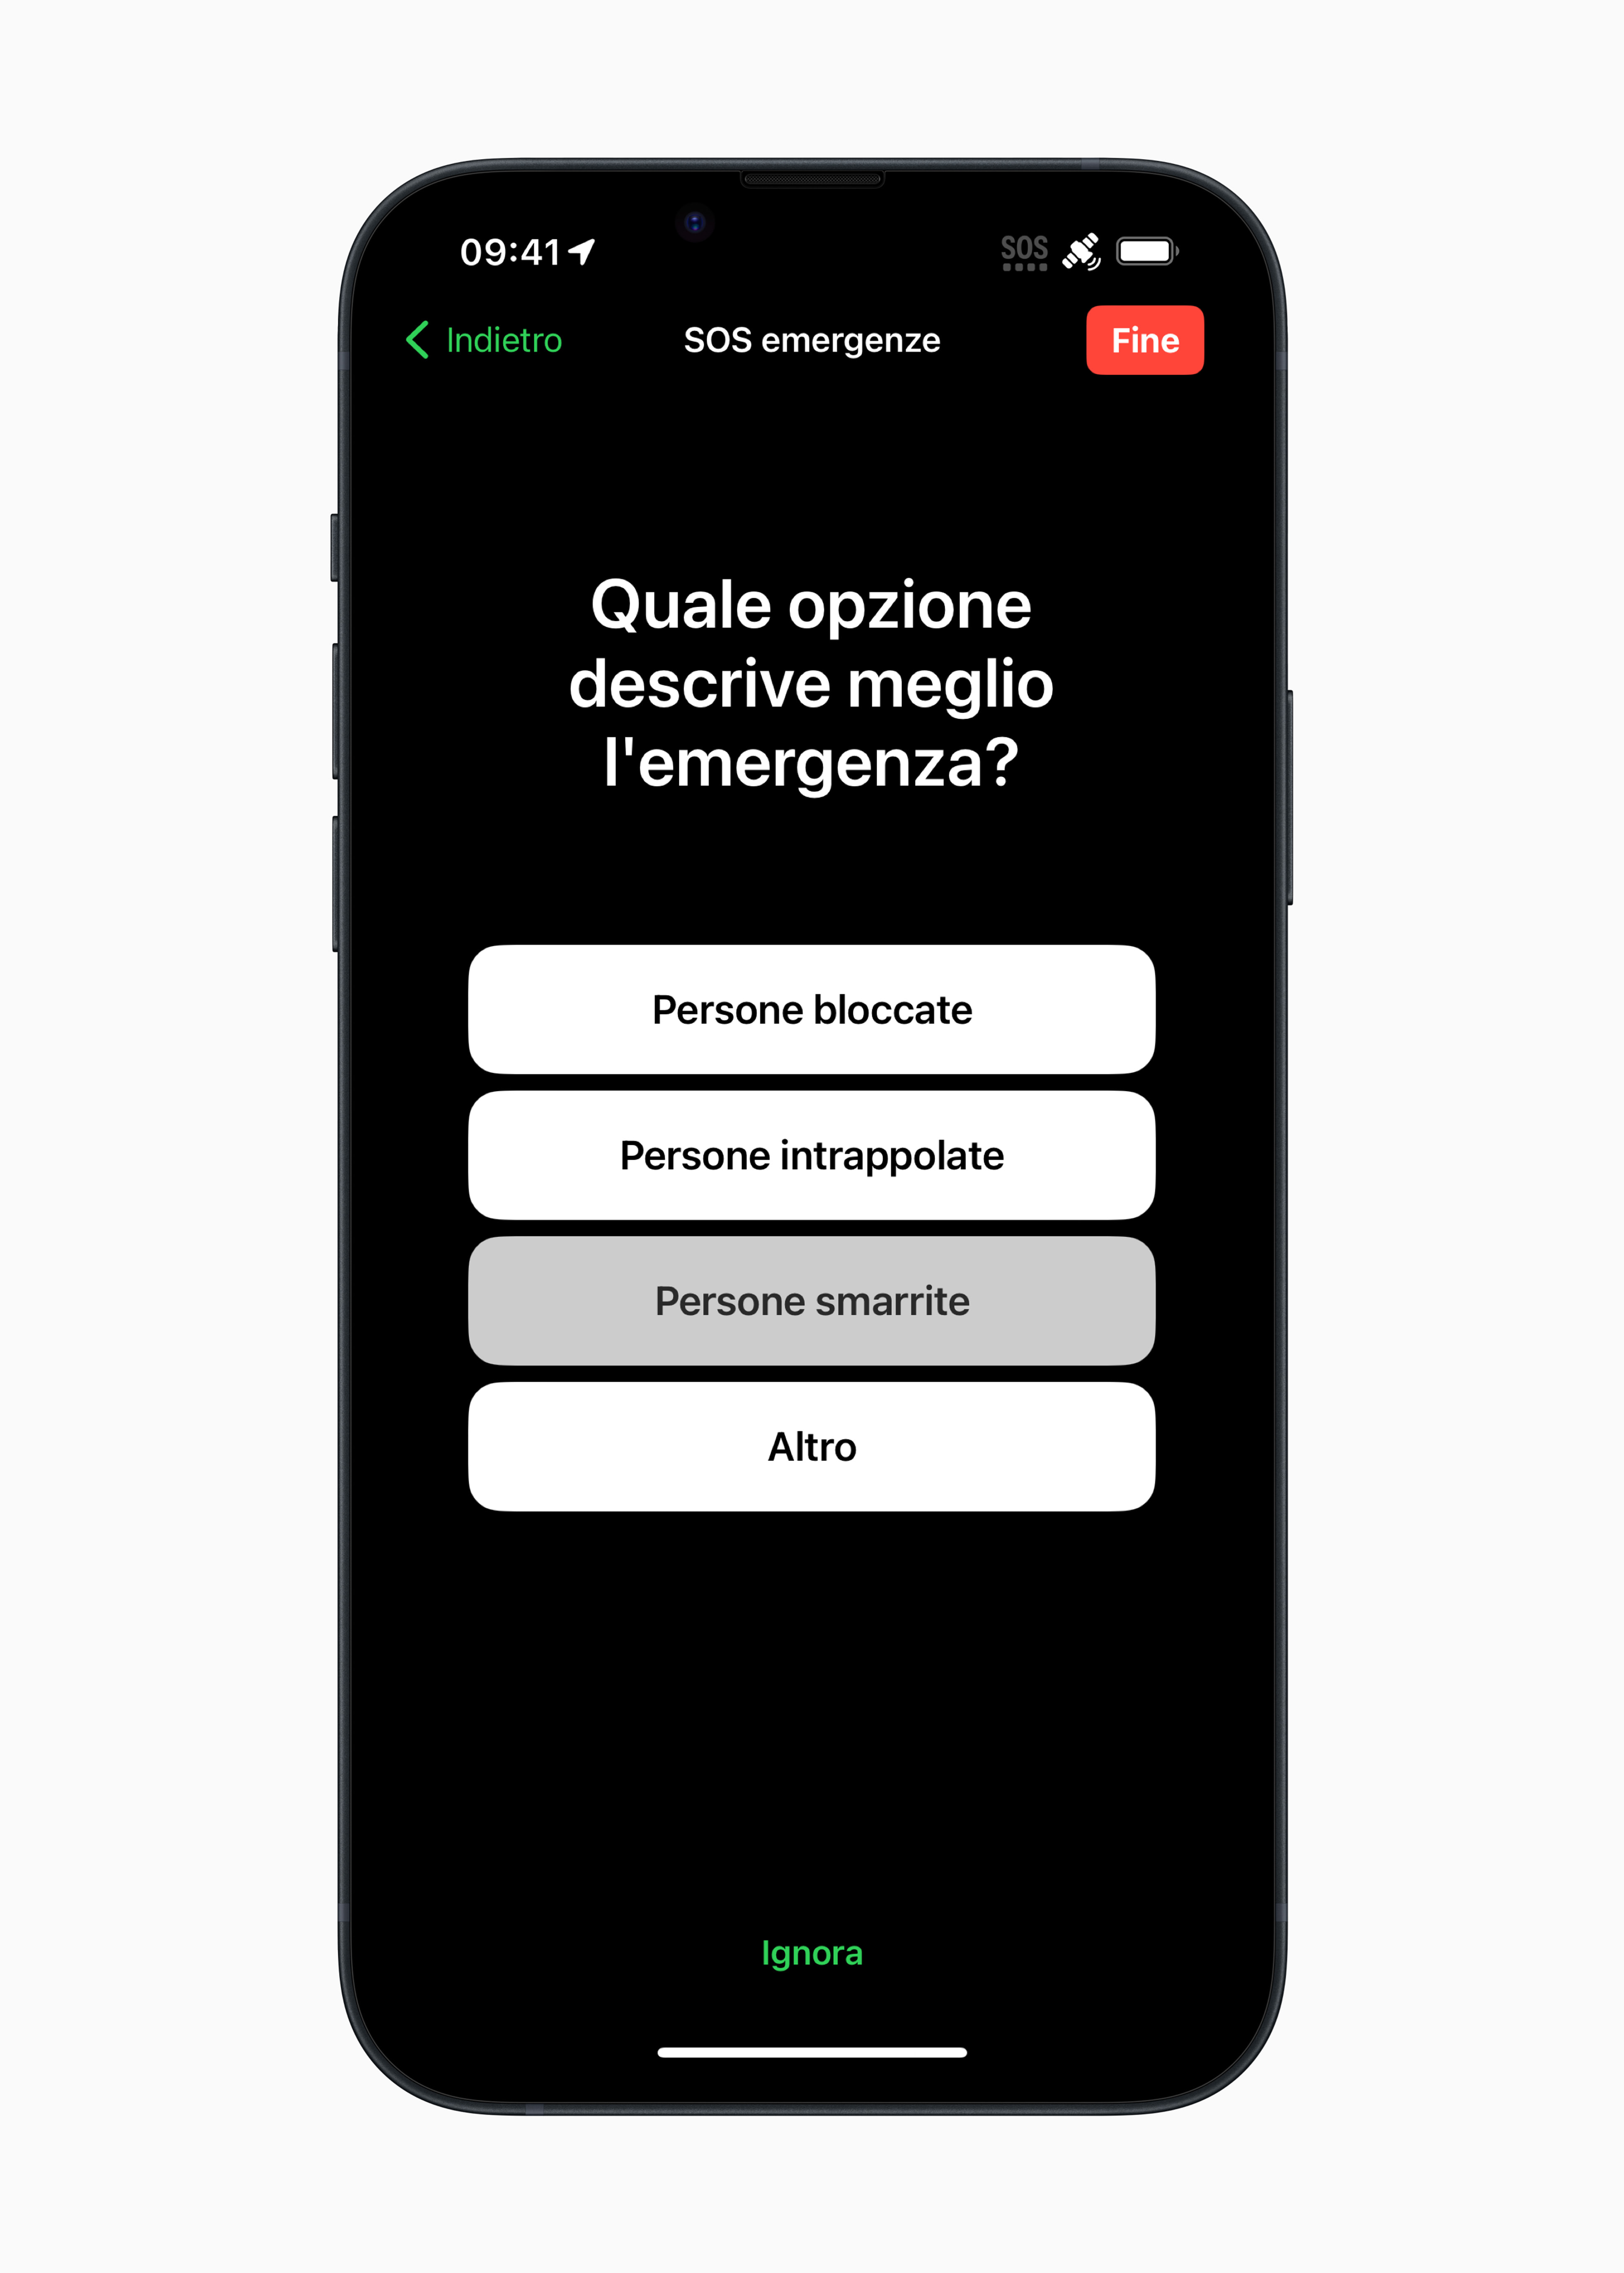 SOS emergenze via satellite disponibile oggi sulla linea iPhone 14 in  Austria, Belgio, Italia, Lussemburgo, Paesi Bassi e Portogallo - Apple (IT)